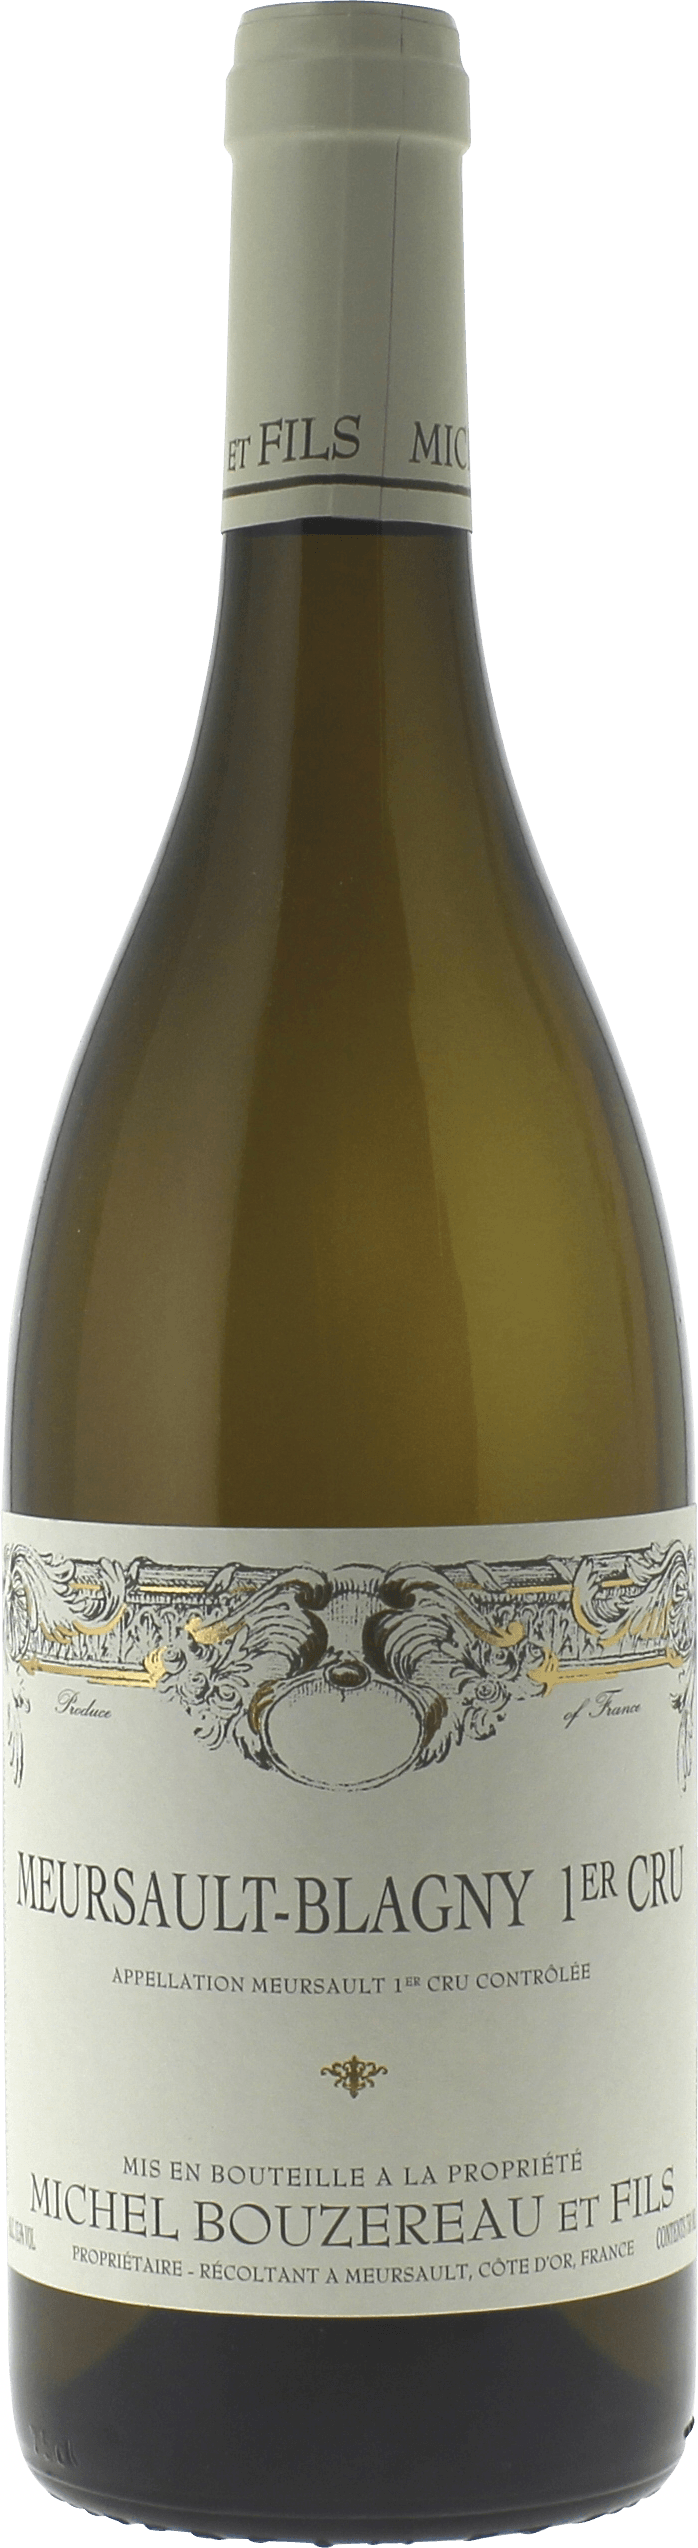 Meursault blagny 1er cru 2016 Domaine BOUZEREAU Michel et fils, Bourgogne blanc